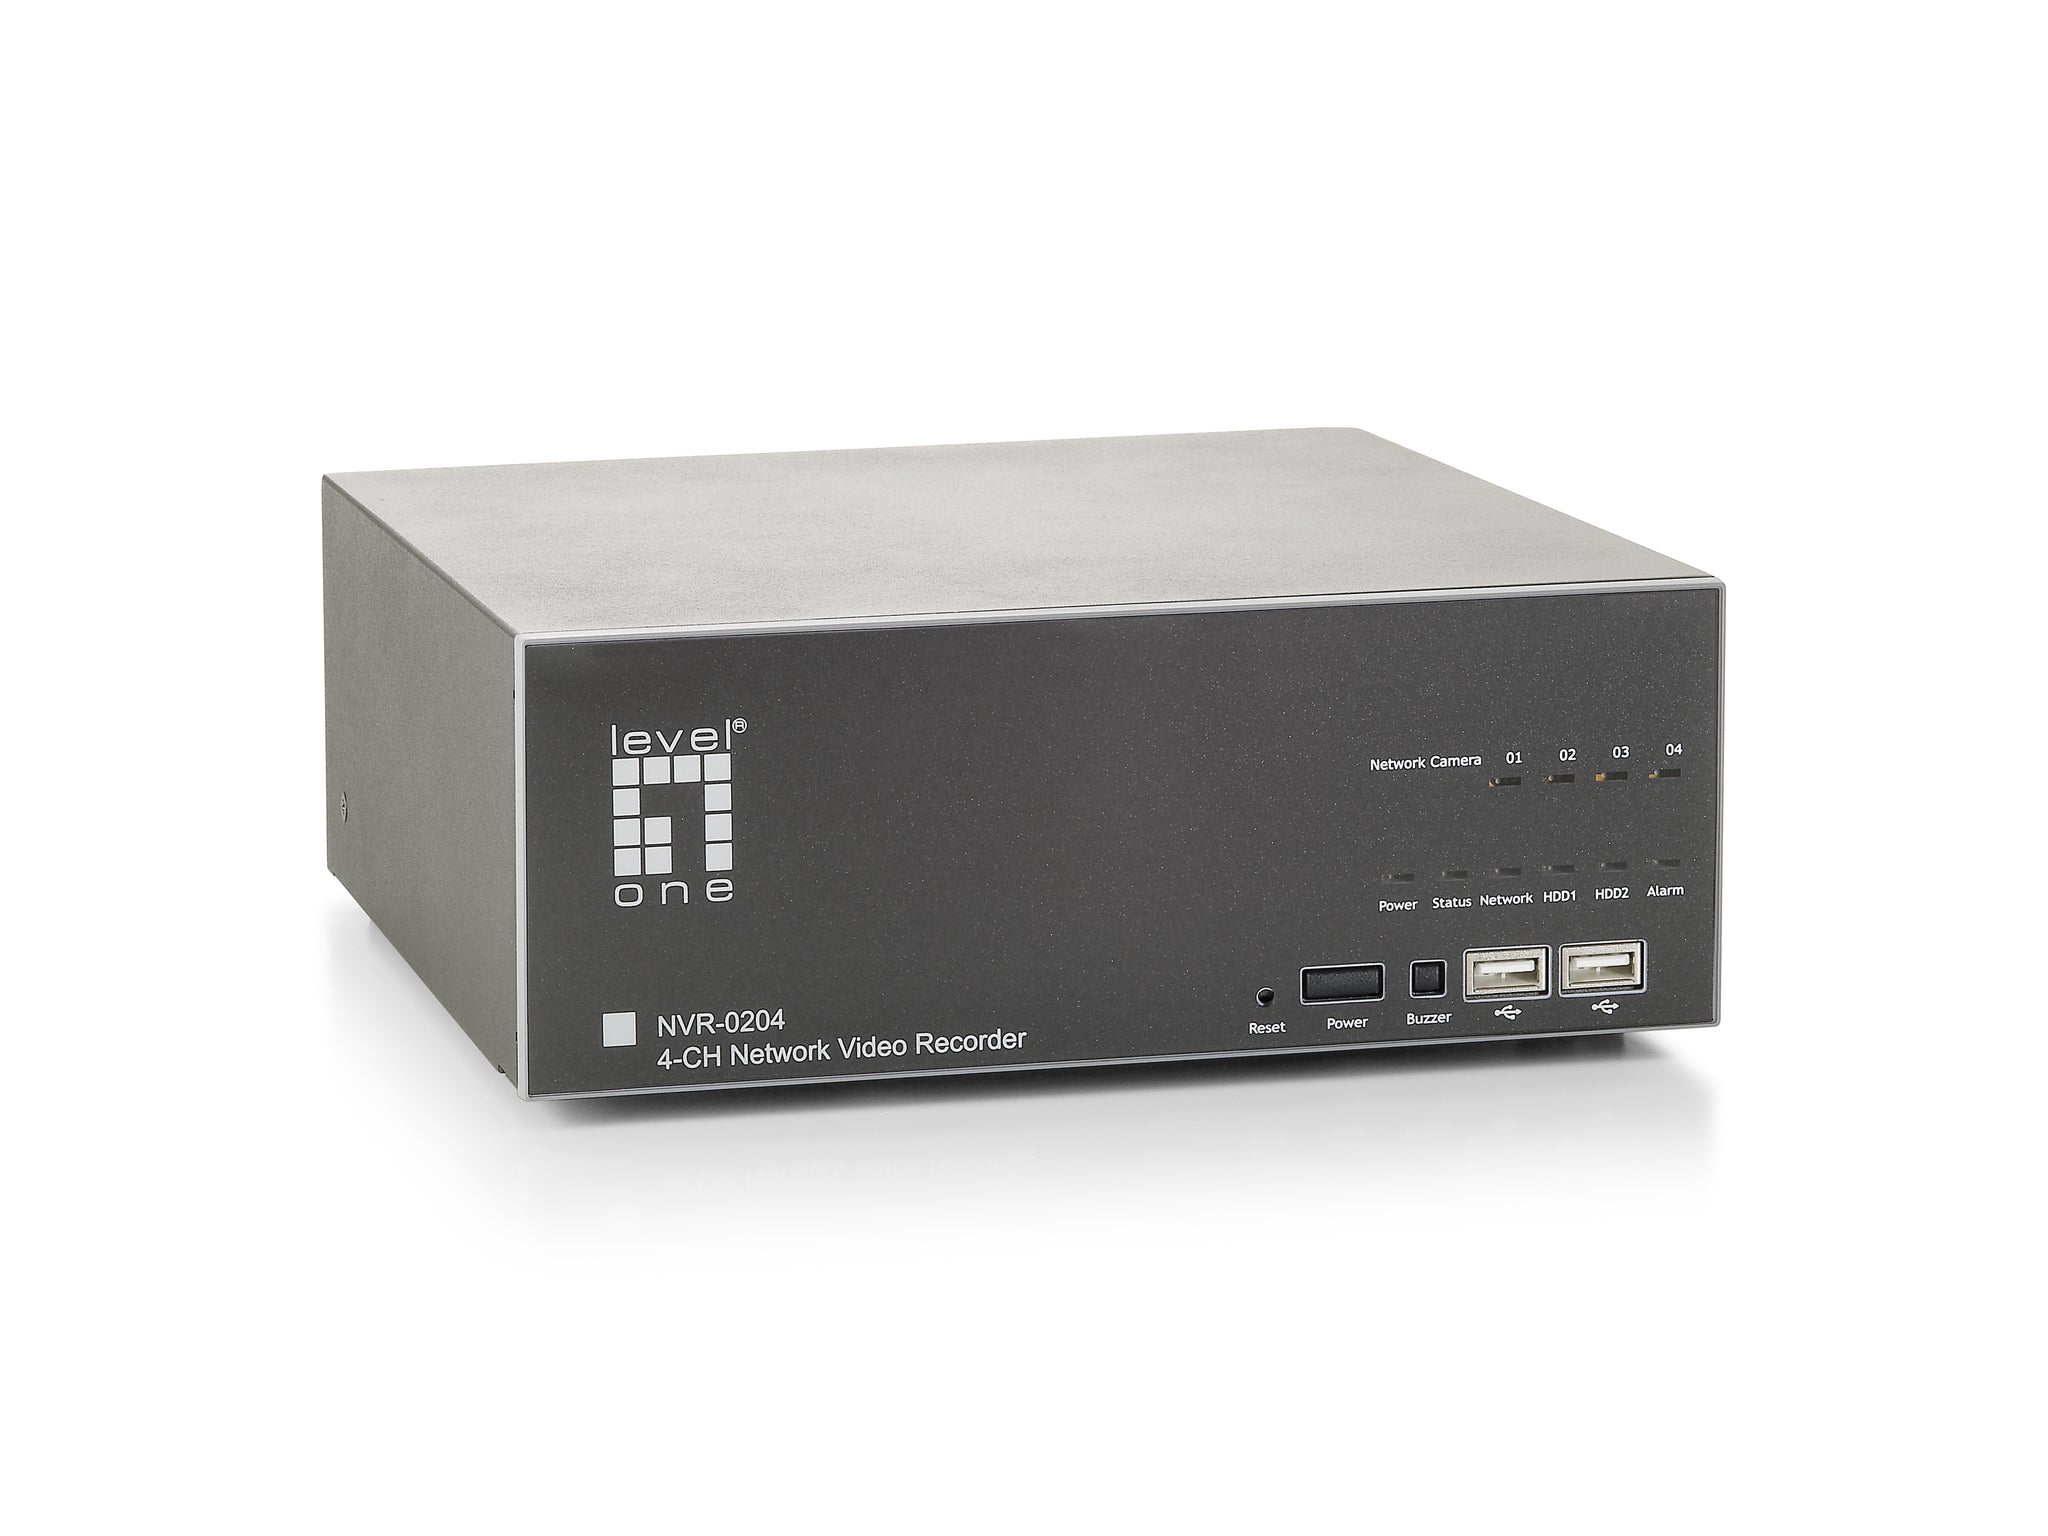 NVR-0204 4-CH Network Video Recorder